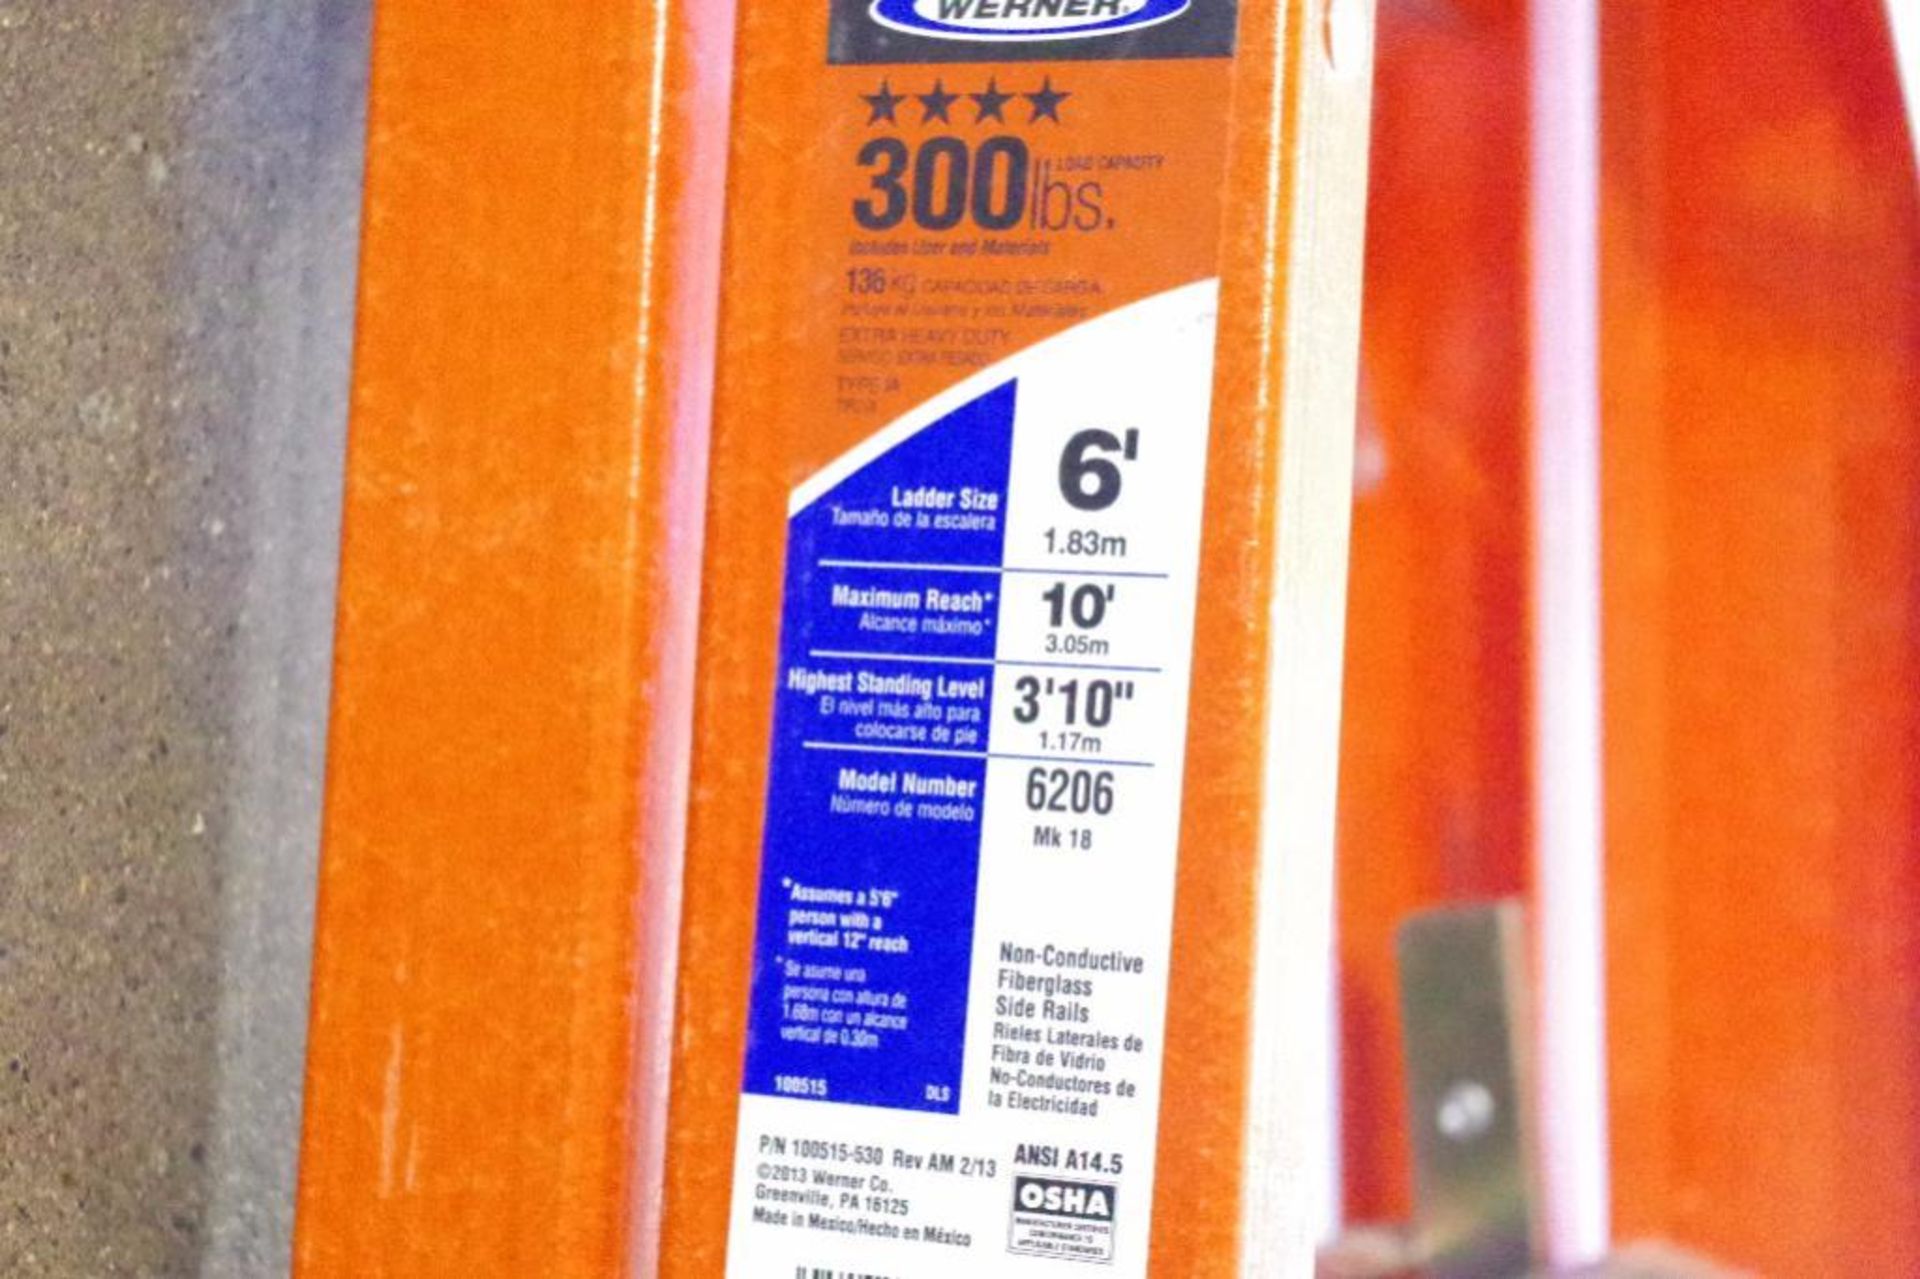 ?WERNER 6' Orange Fiberglass Ladder, 300 lb. Capacity, M/N 6200 - Image 5 of 5